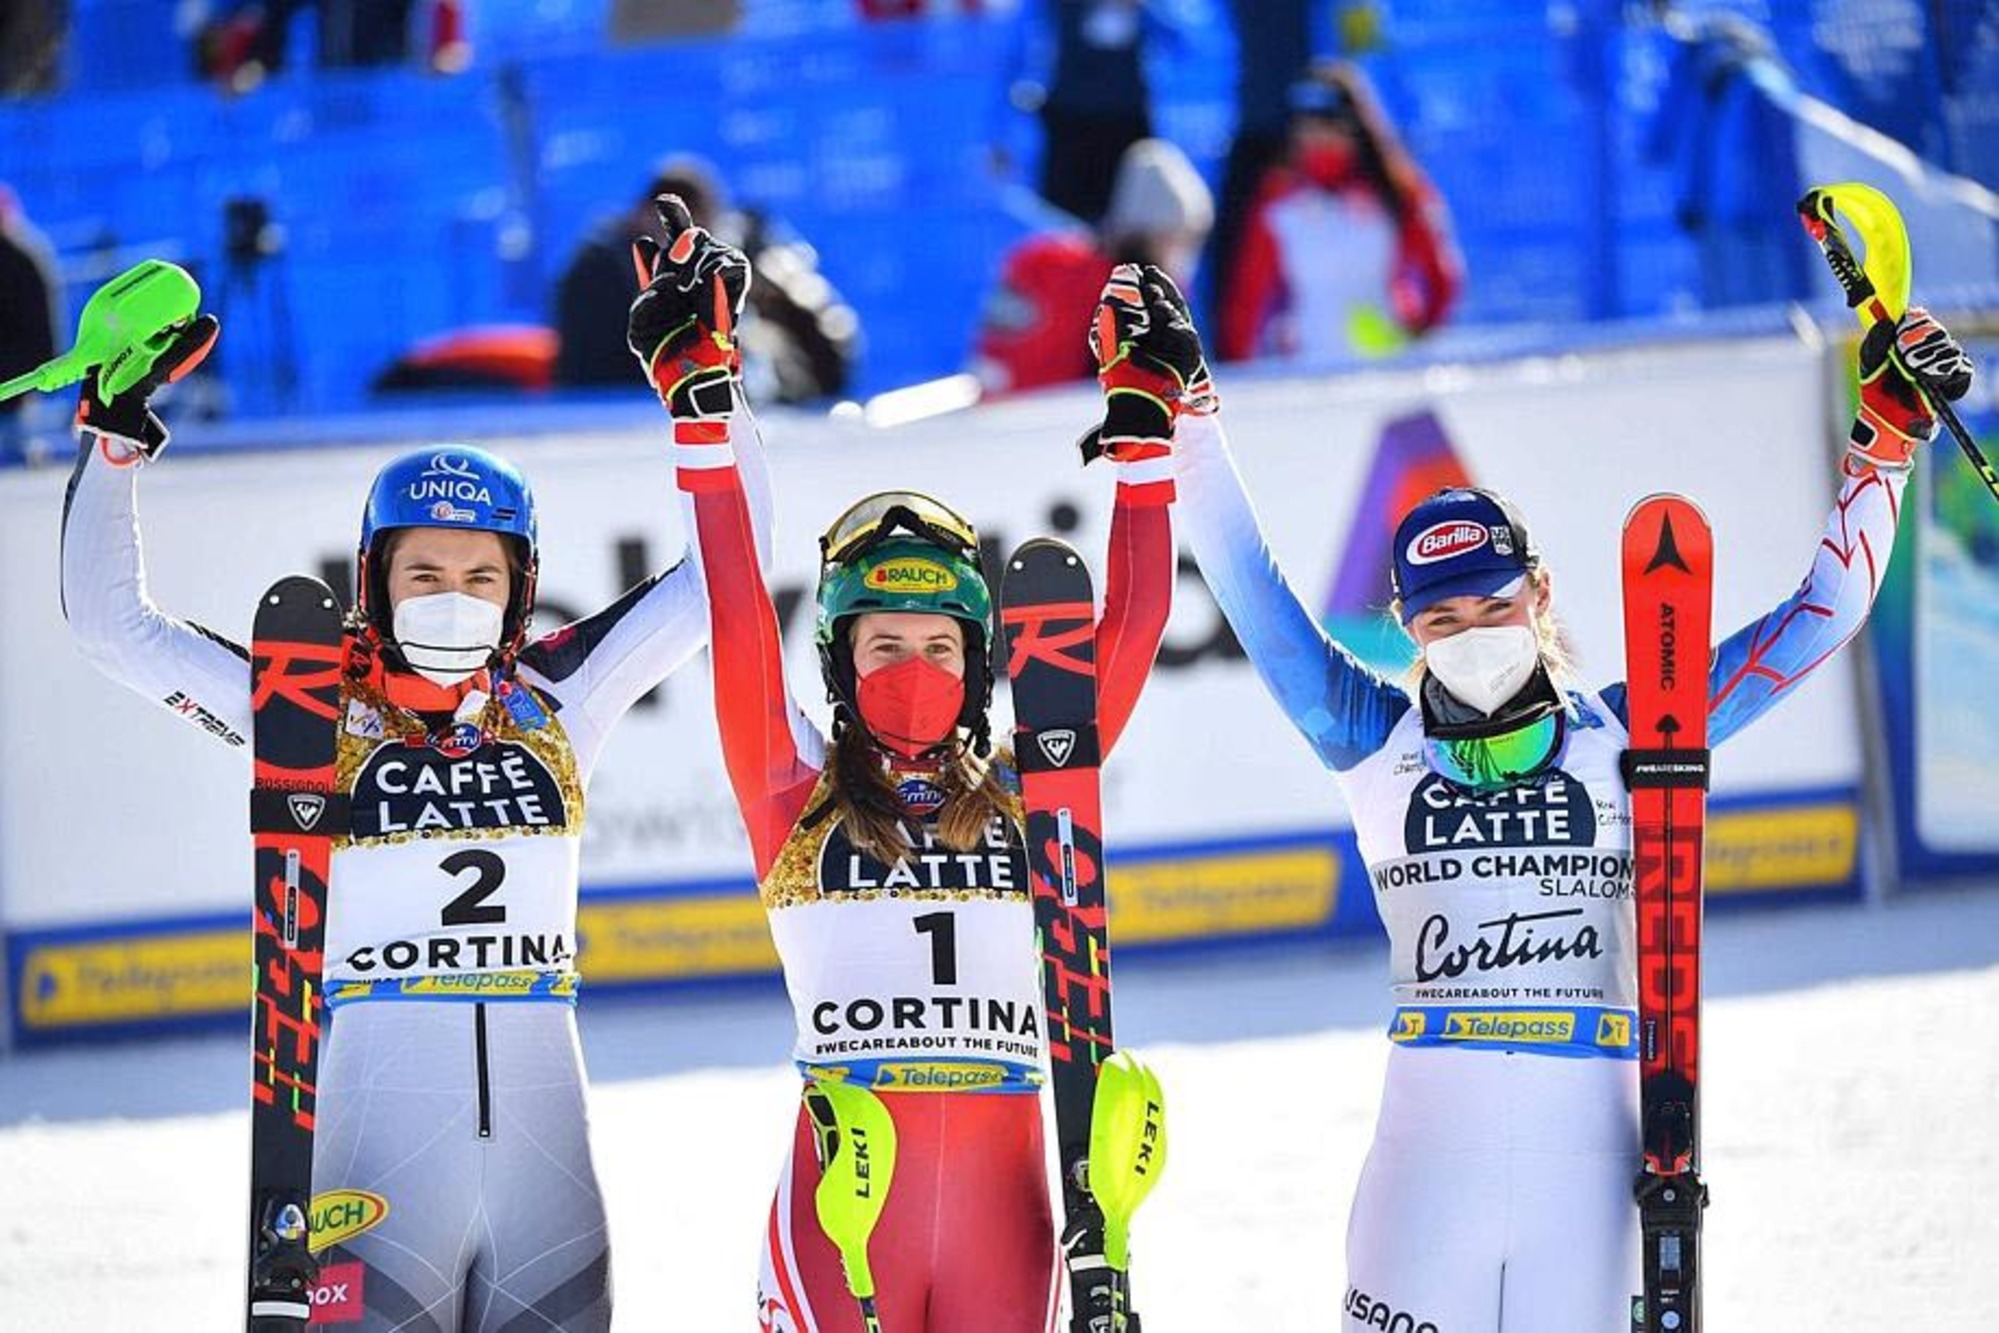 Championnats du monde de ski alpin: Katharina Liensberger en or, Nastasia Noens aux portes du top 10